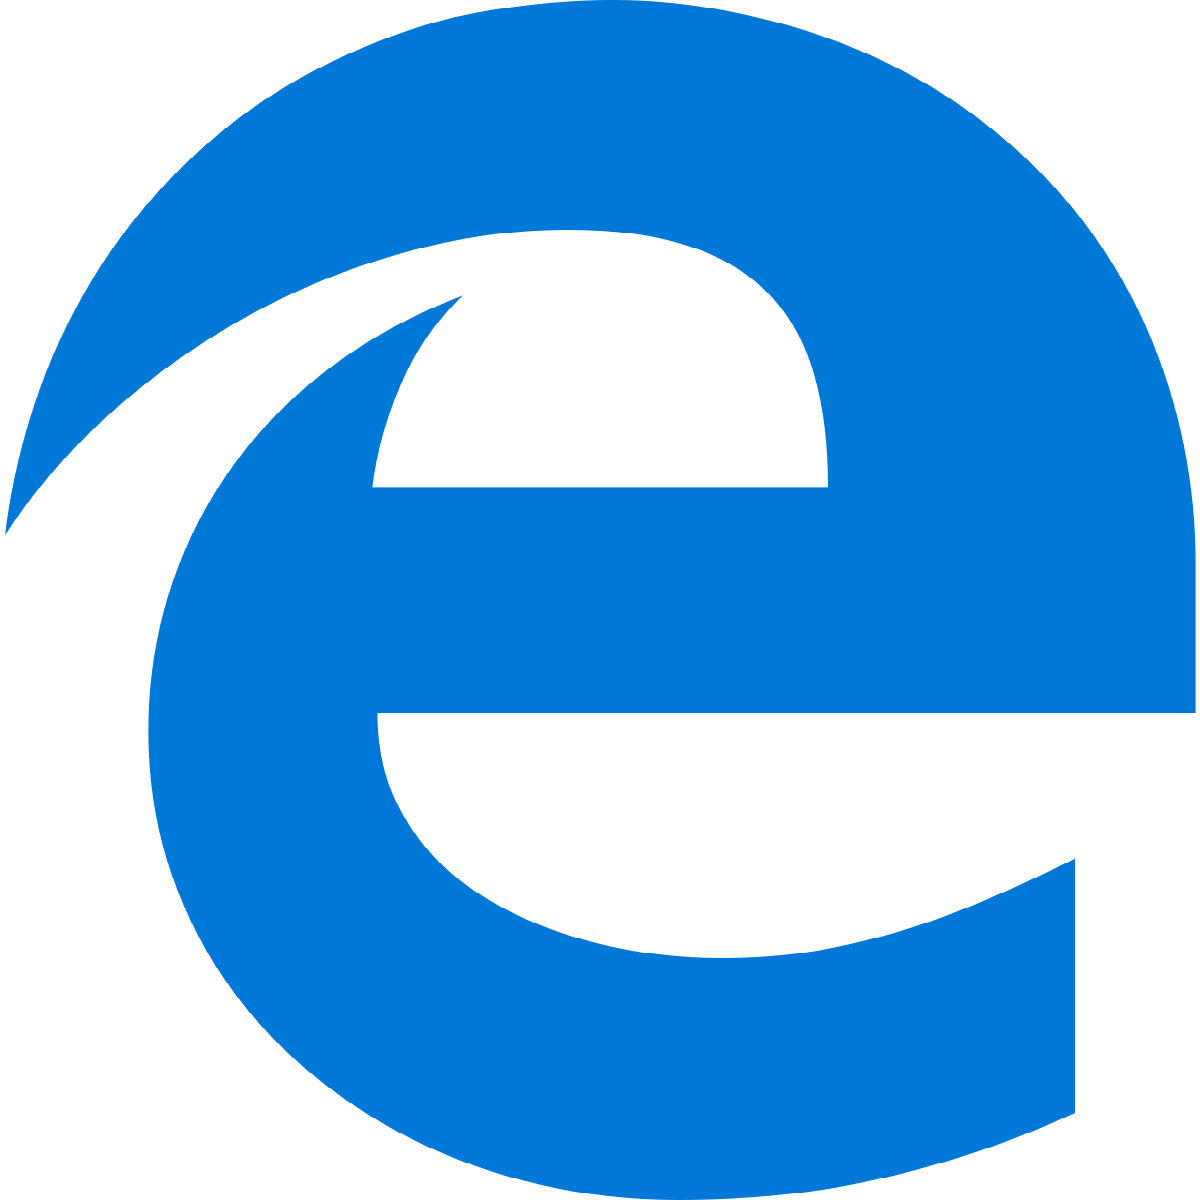 Microsoft disables VBScript by default in Internet Explorer 11